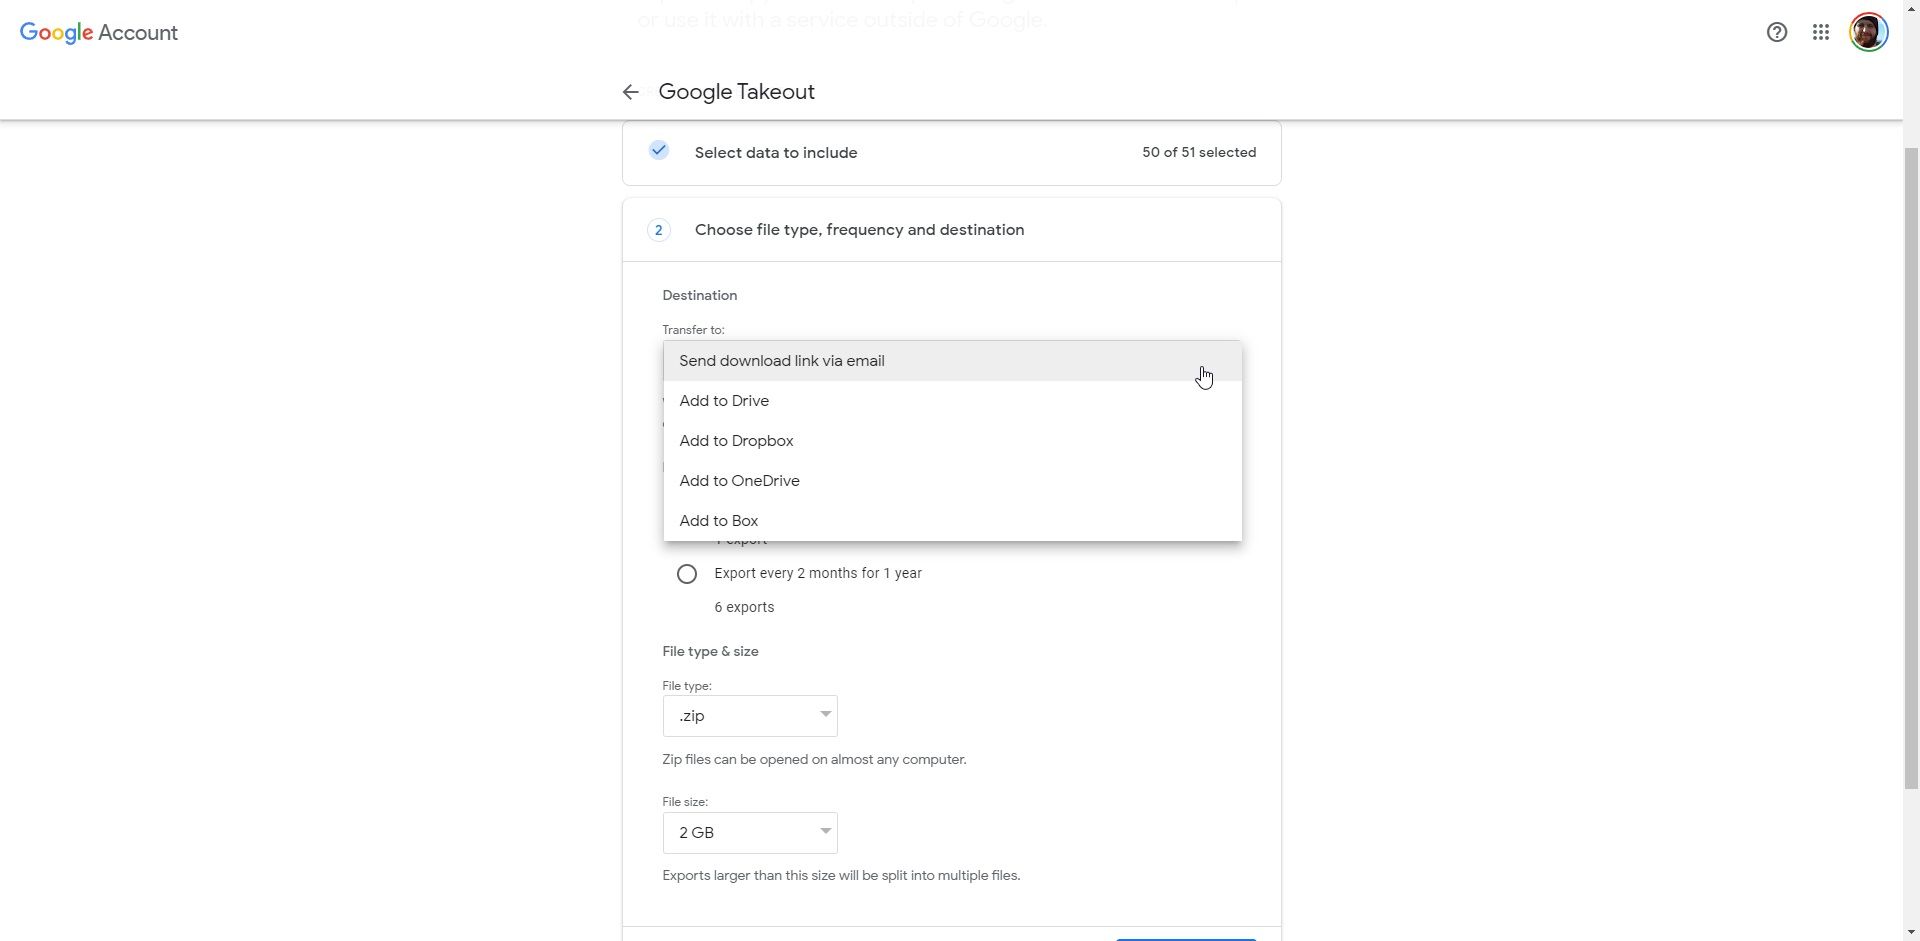 google account activity data backup options